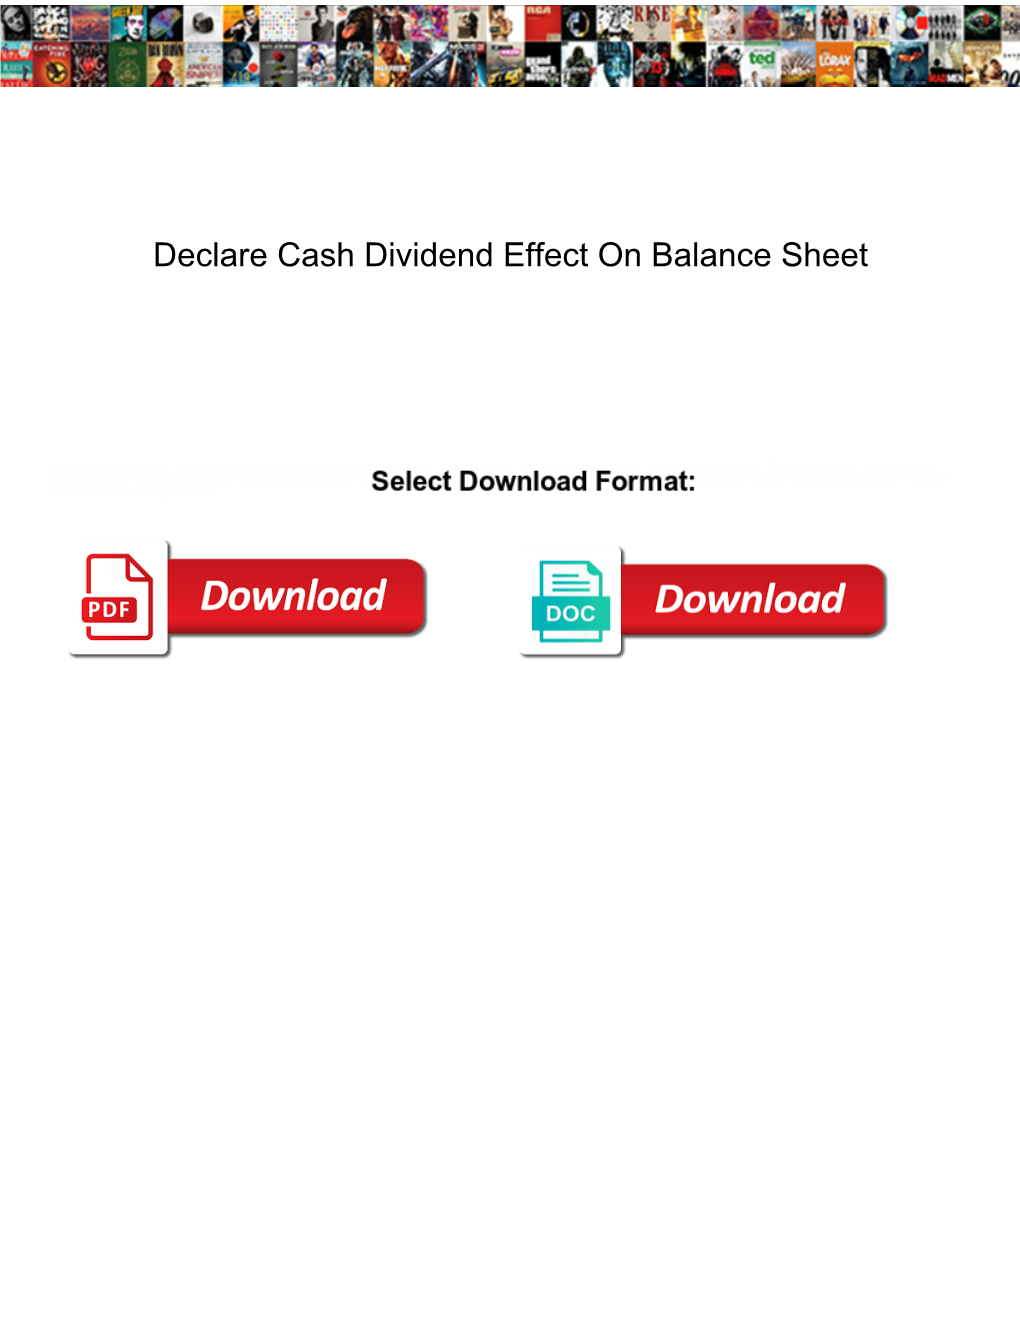 Declare Cash Dividend Effect on Balance Sheet